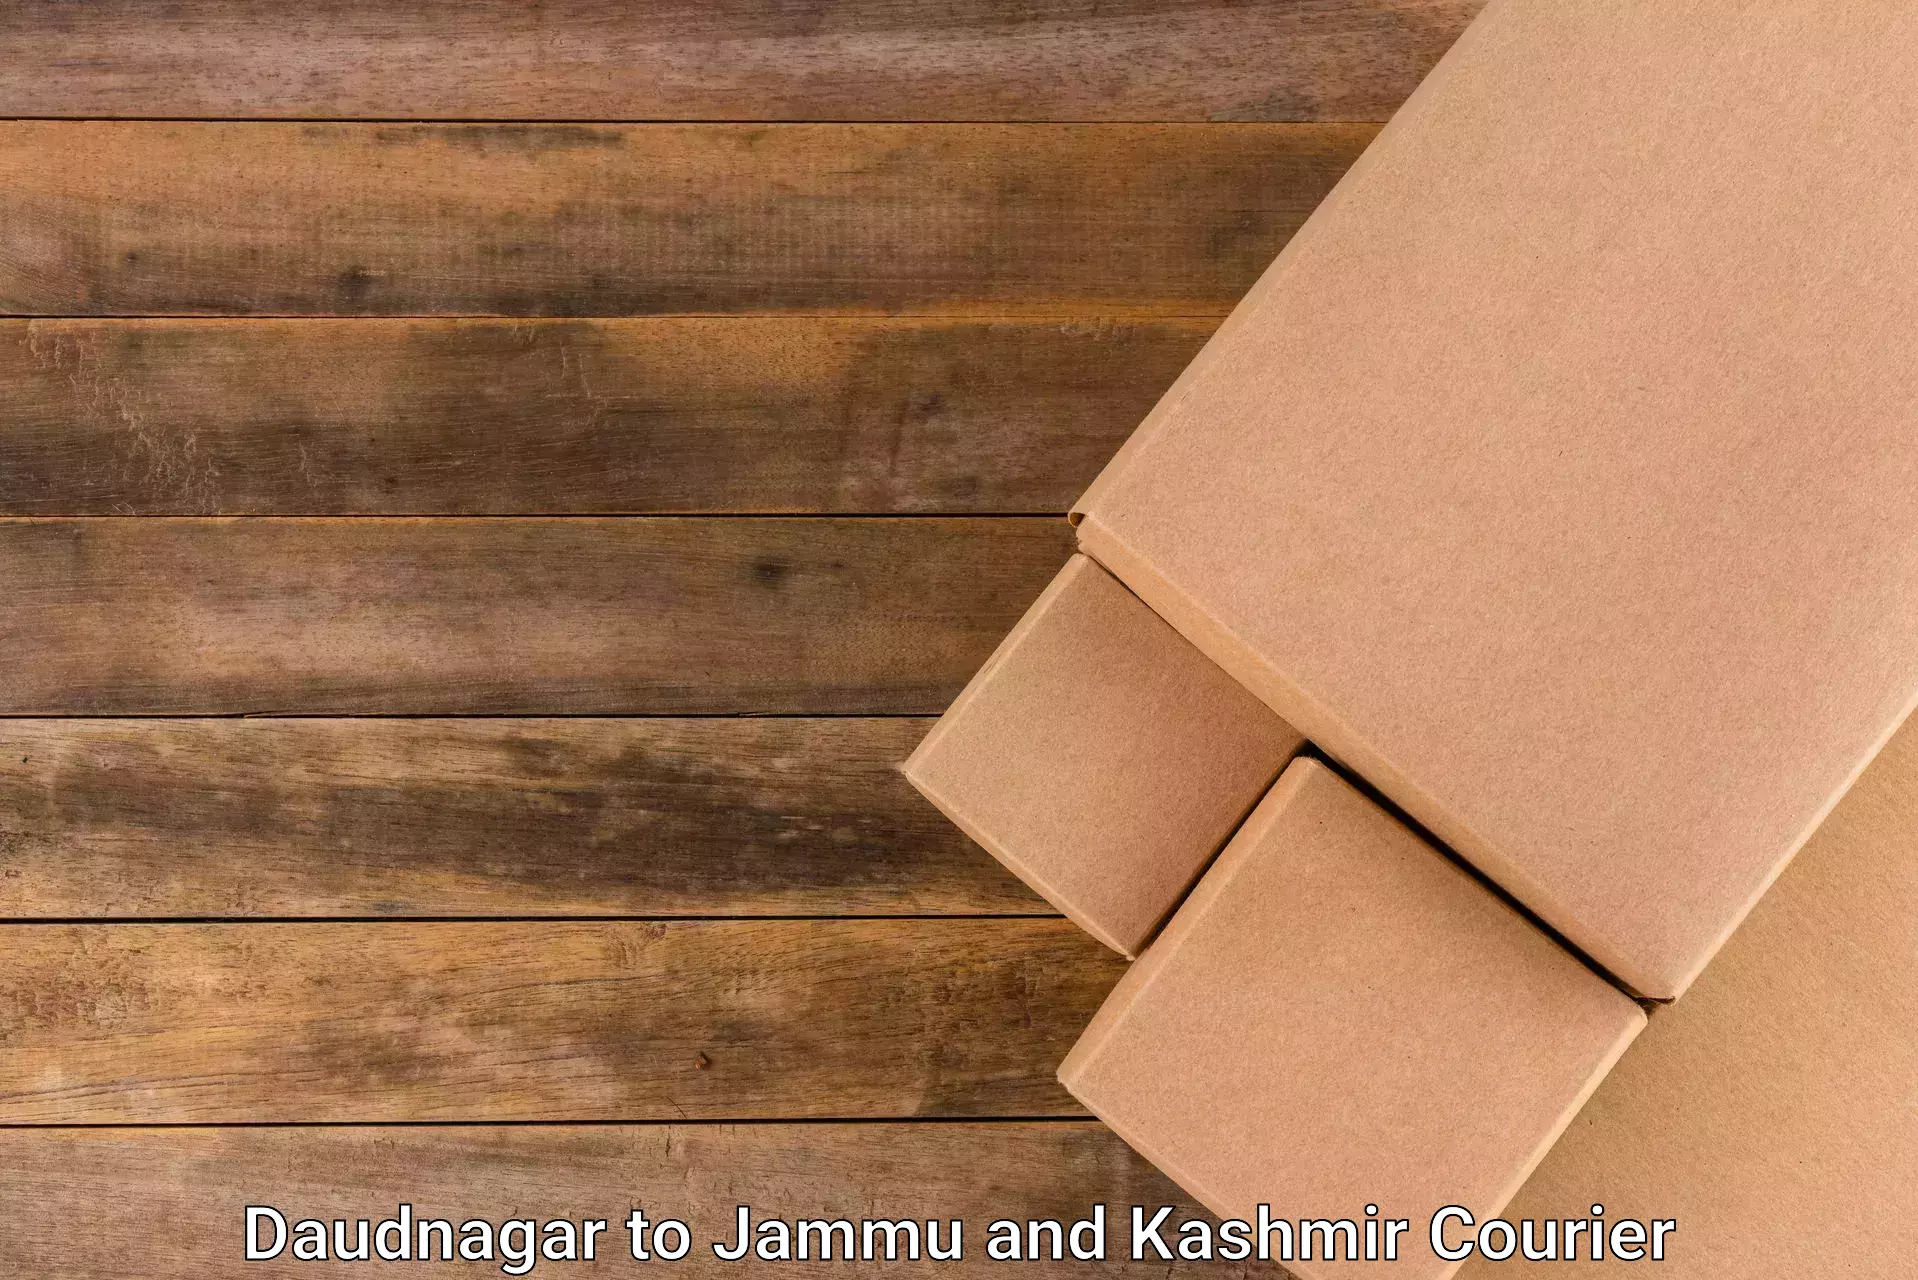 Advanced courier platforms Daudnagar to Baramulla